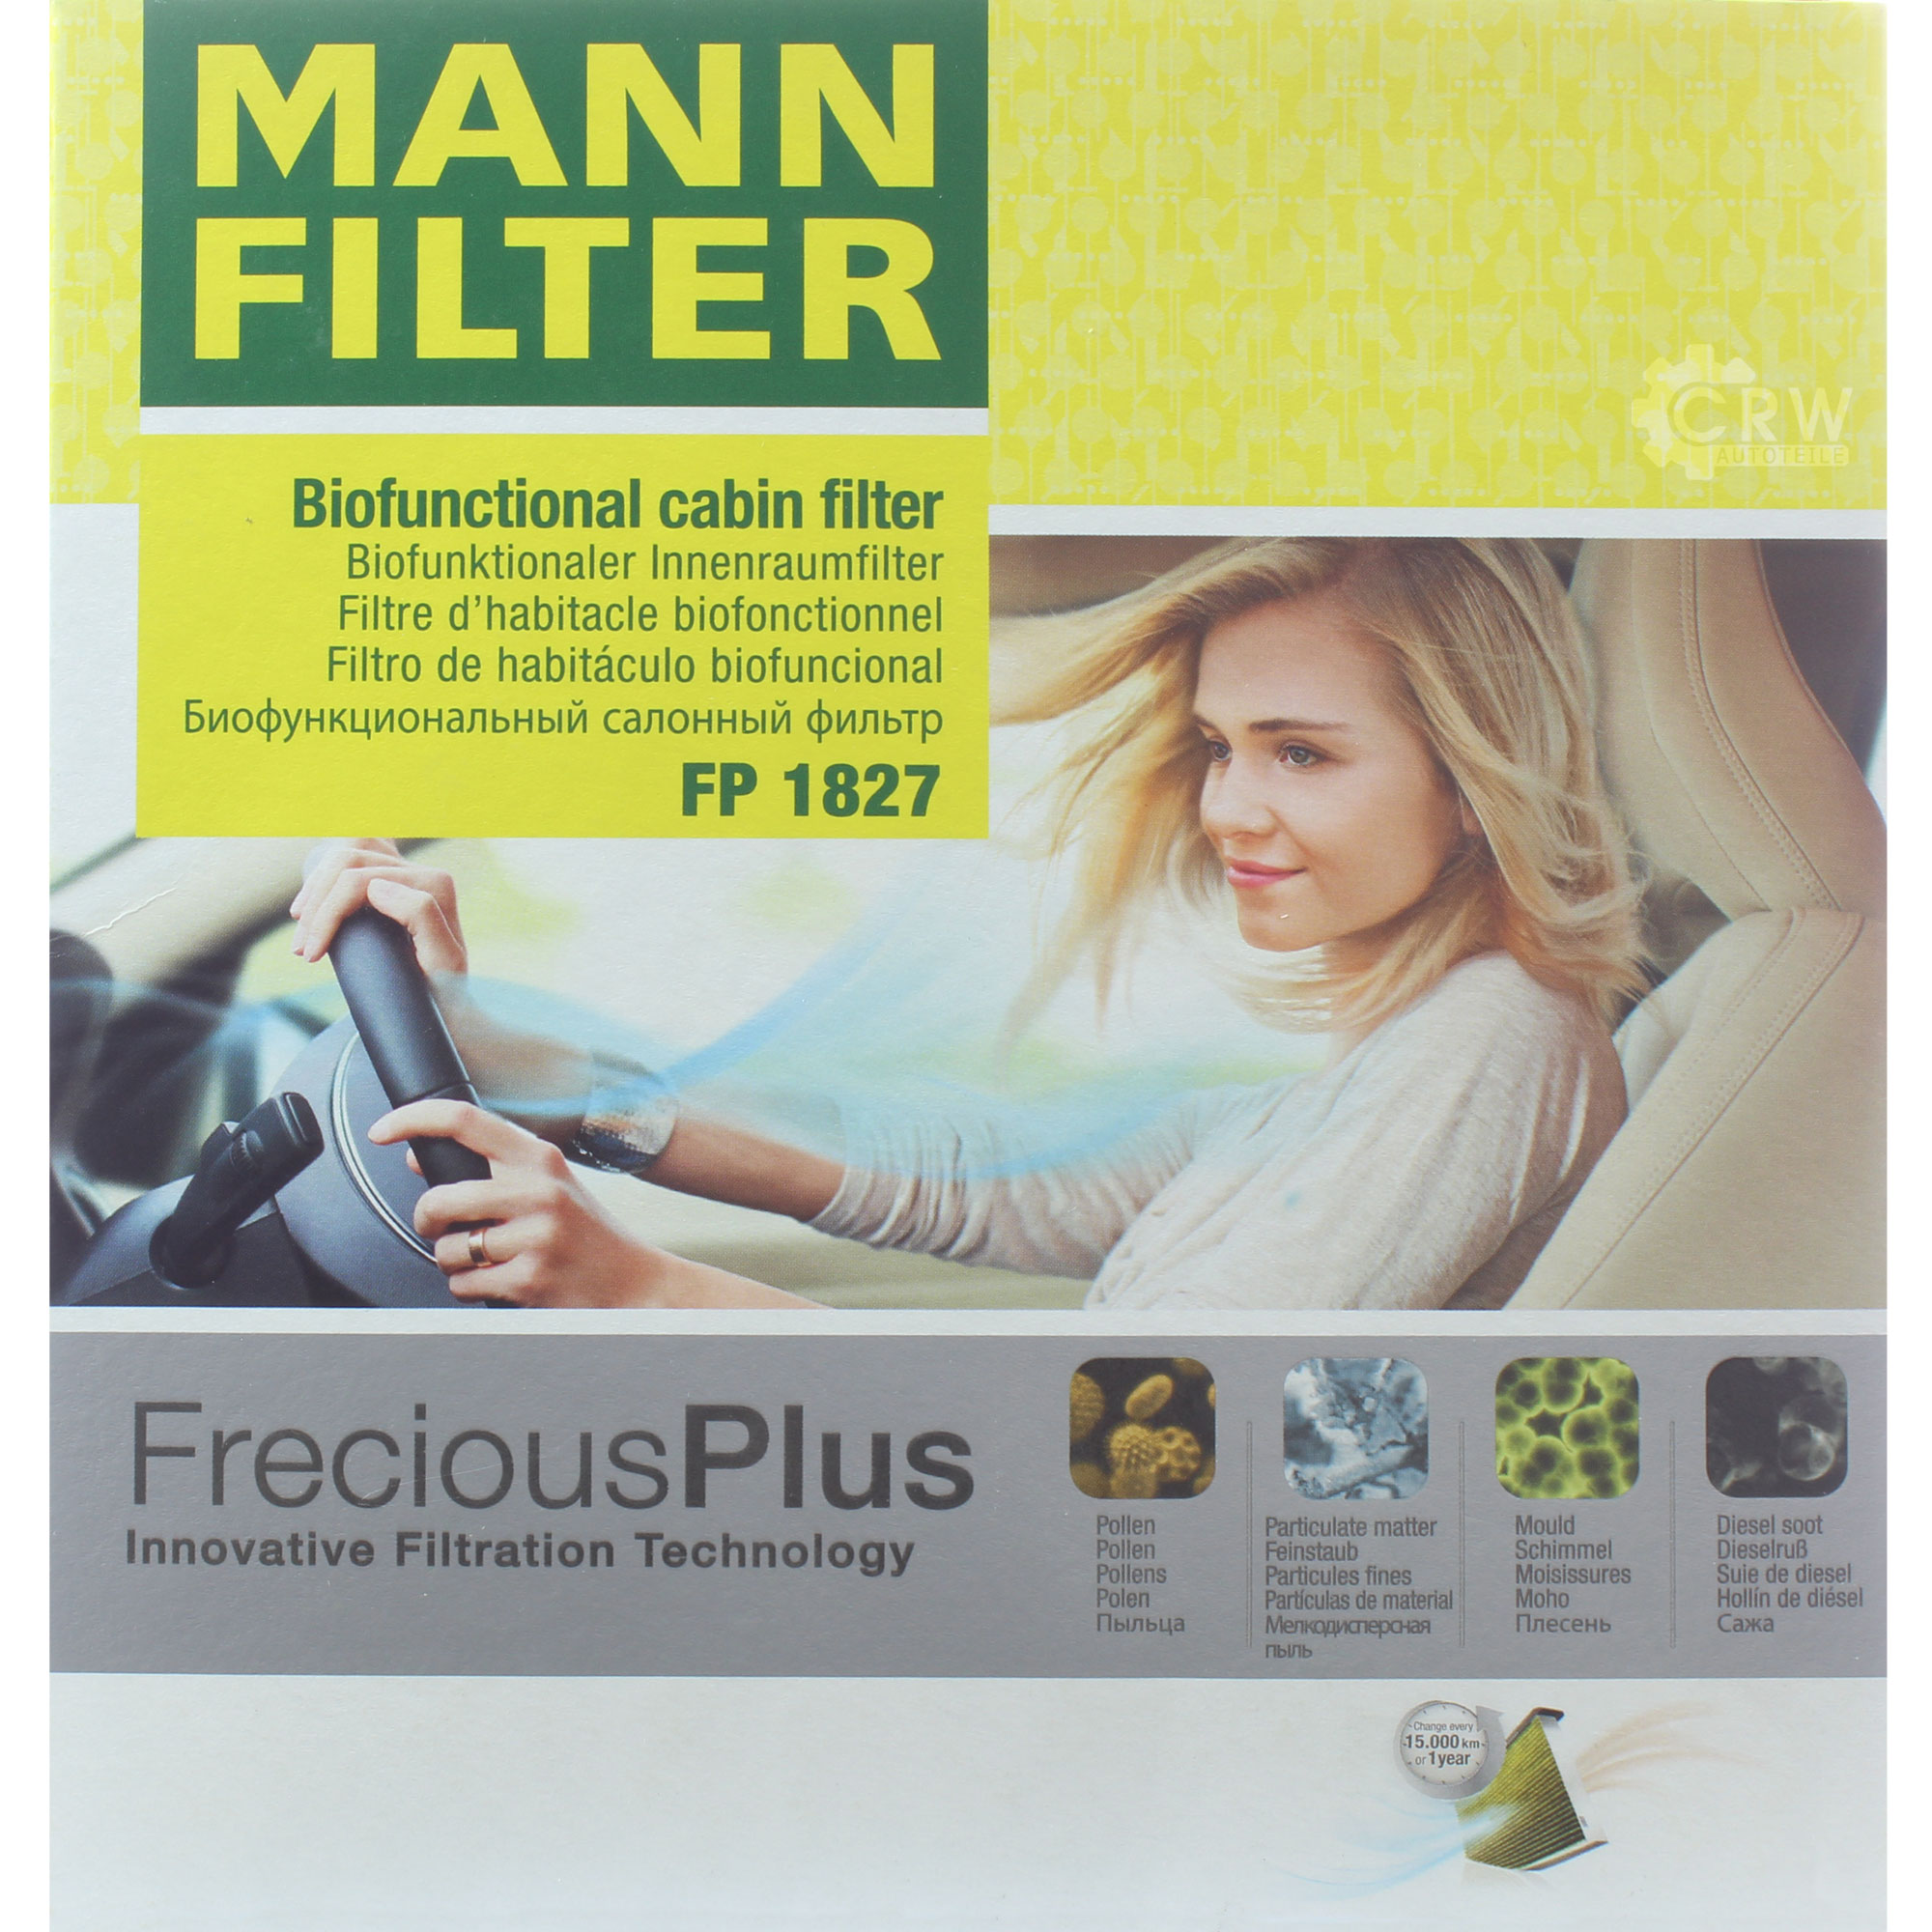 MANN-Filter Innenraumfilter Biofunctional für Allergiker FP 1827